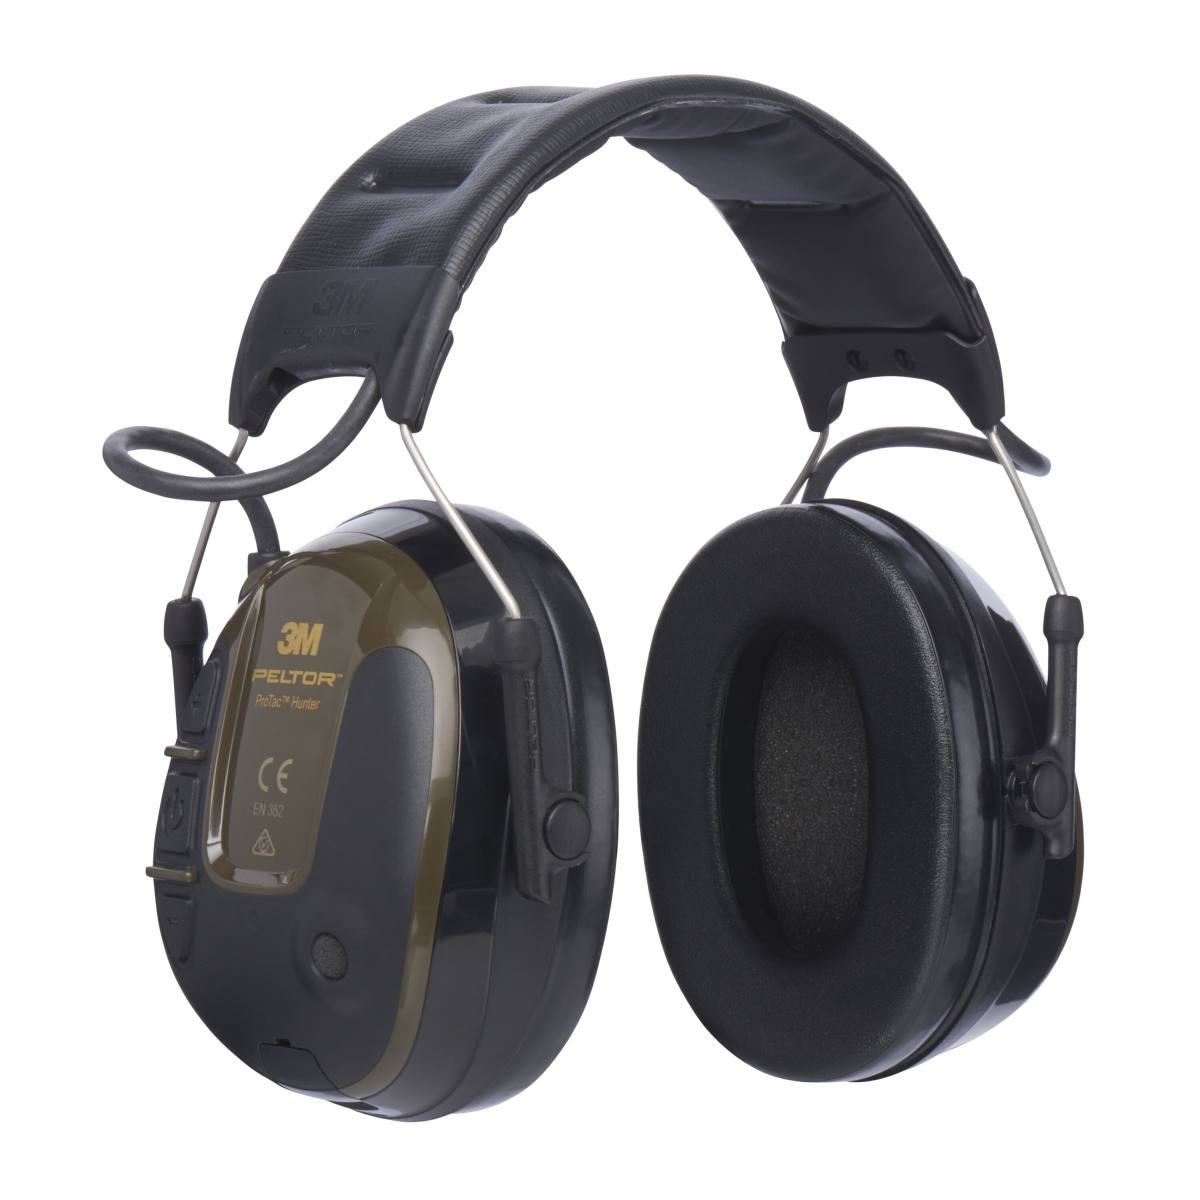 3M Peltor ProTac Hunter hearing protection headset, green, headband, SNR = 26 dB